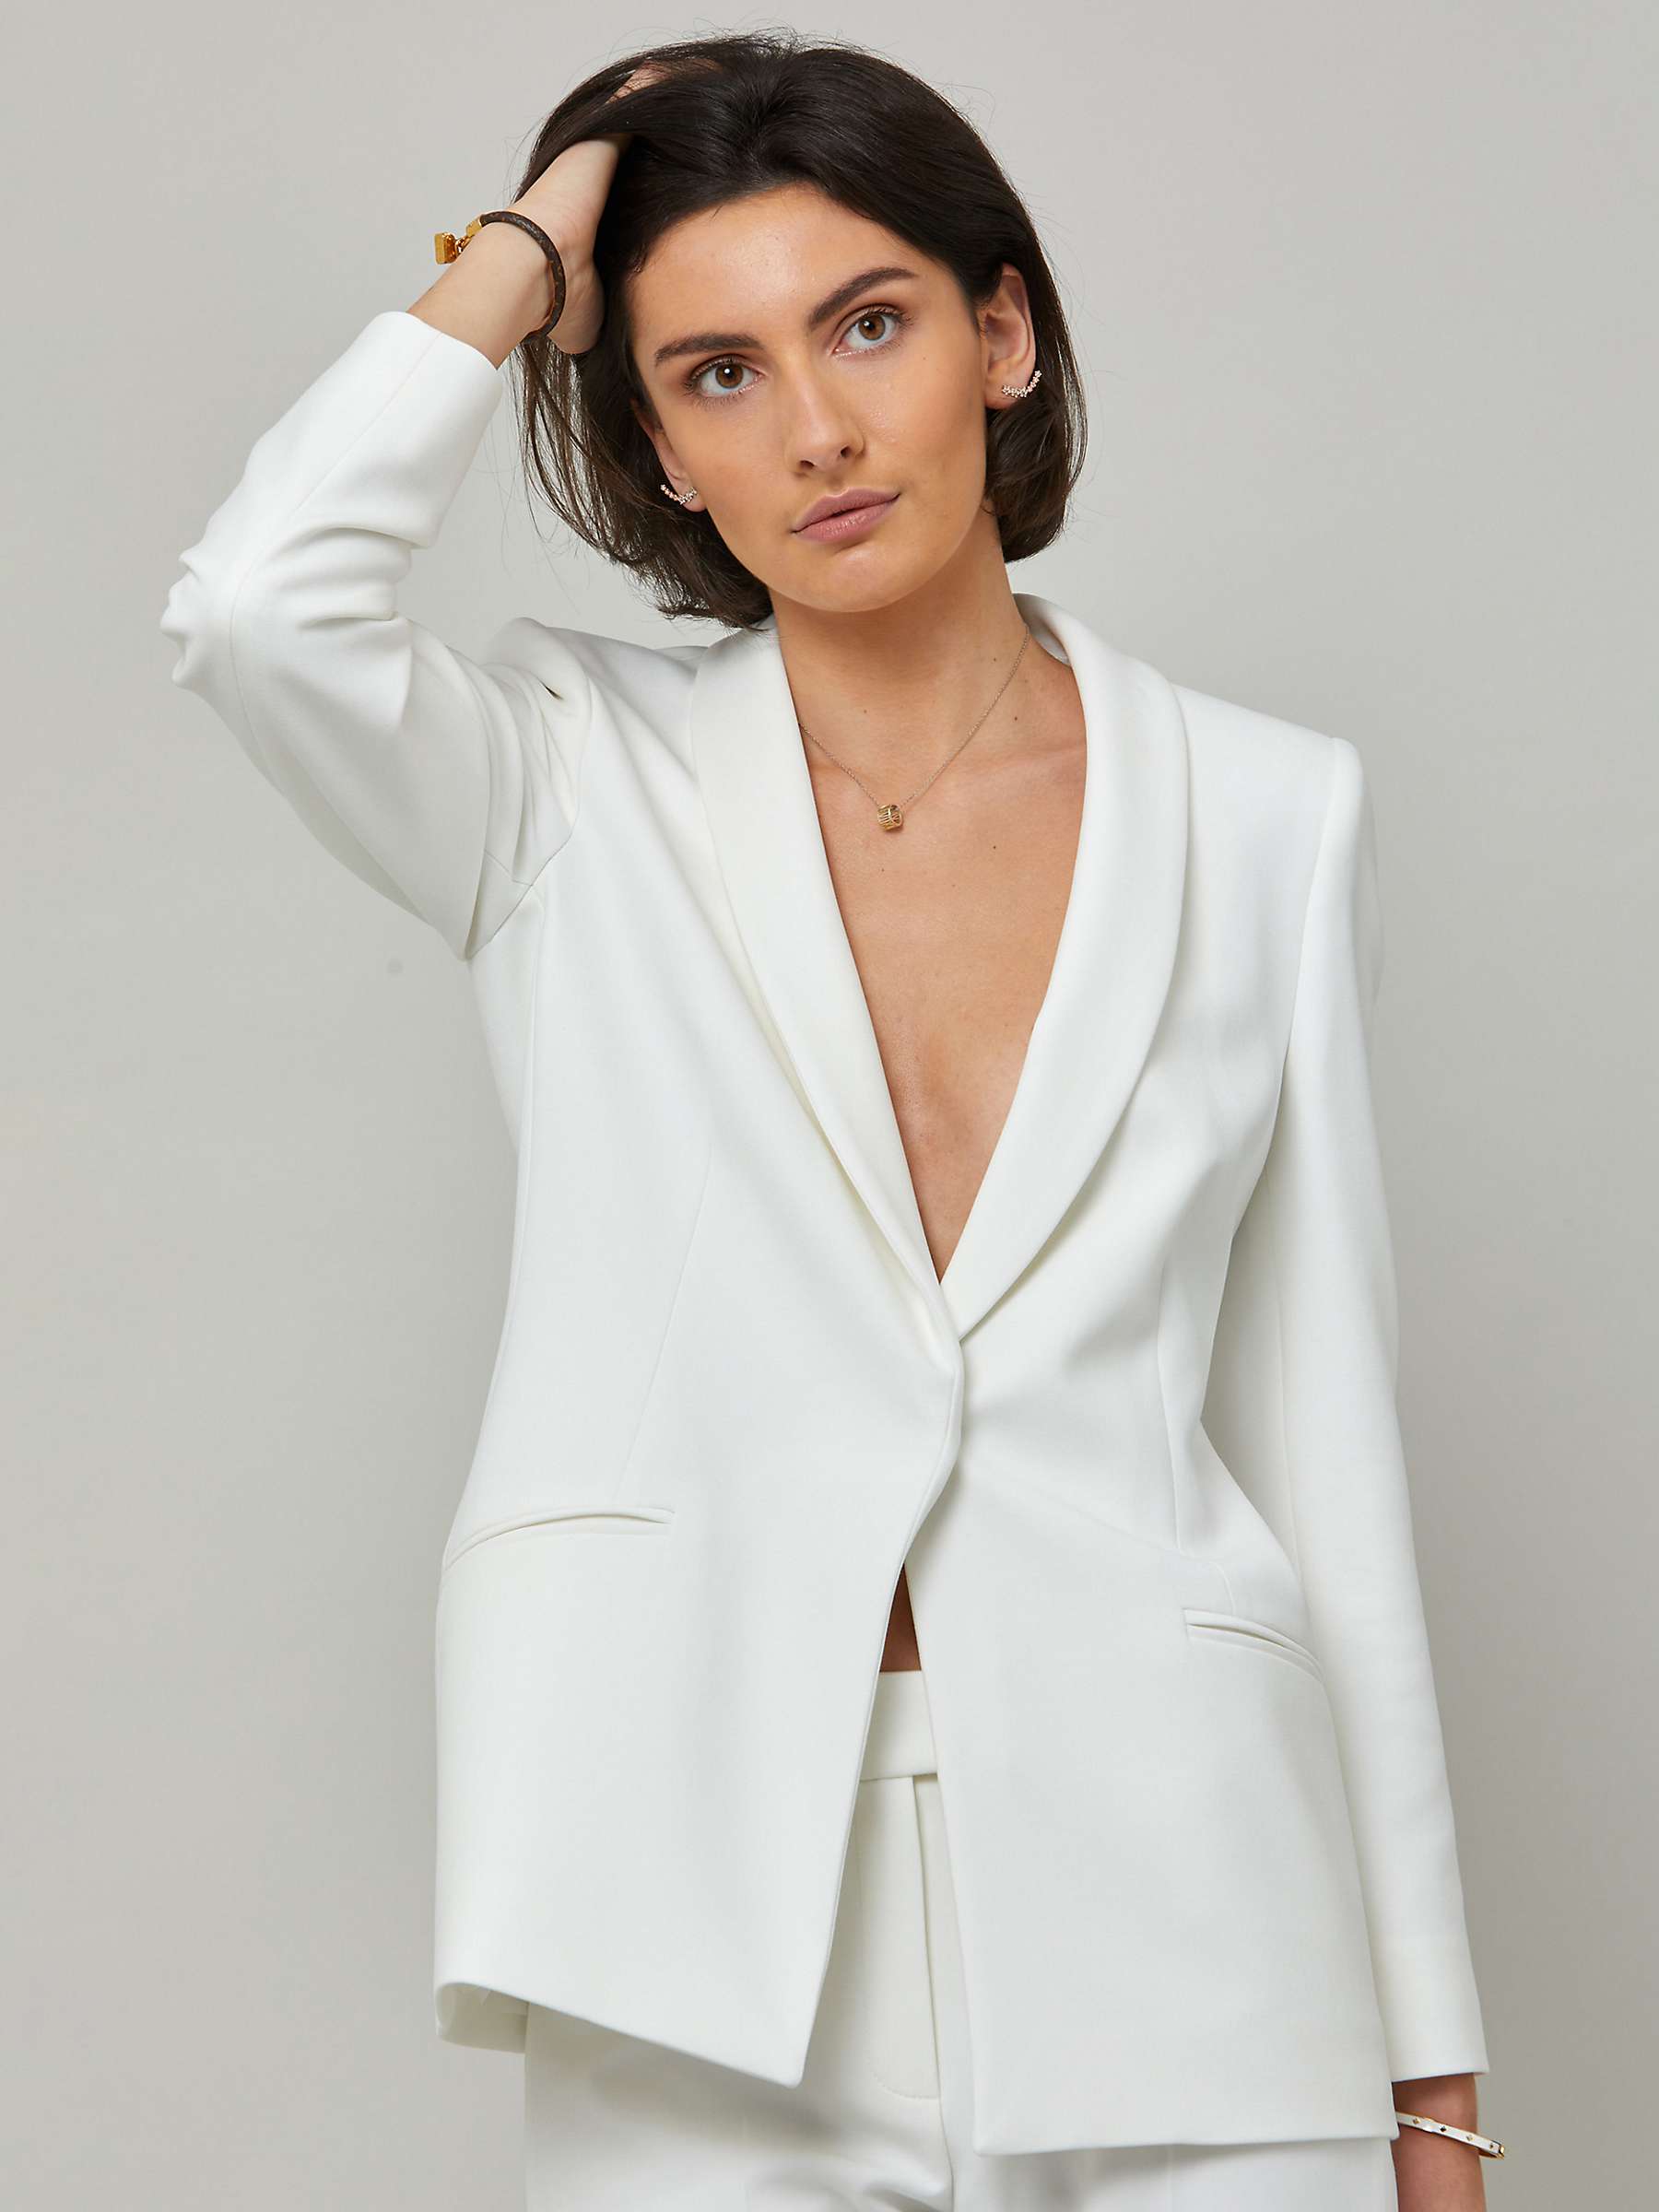 Buy Helen McAlinden Darcie Tailored Tux Jacket, White Online at johnlewis.com